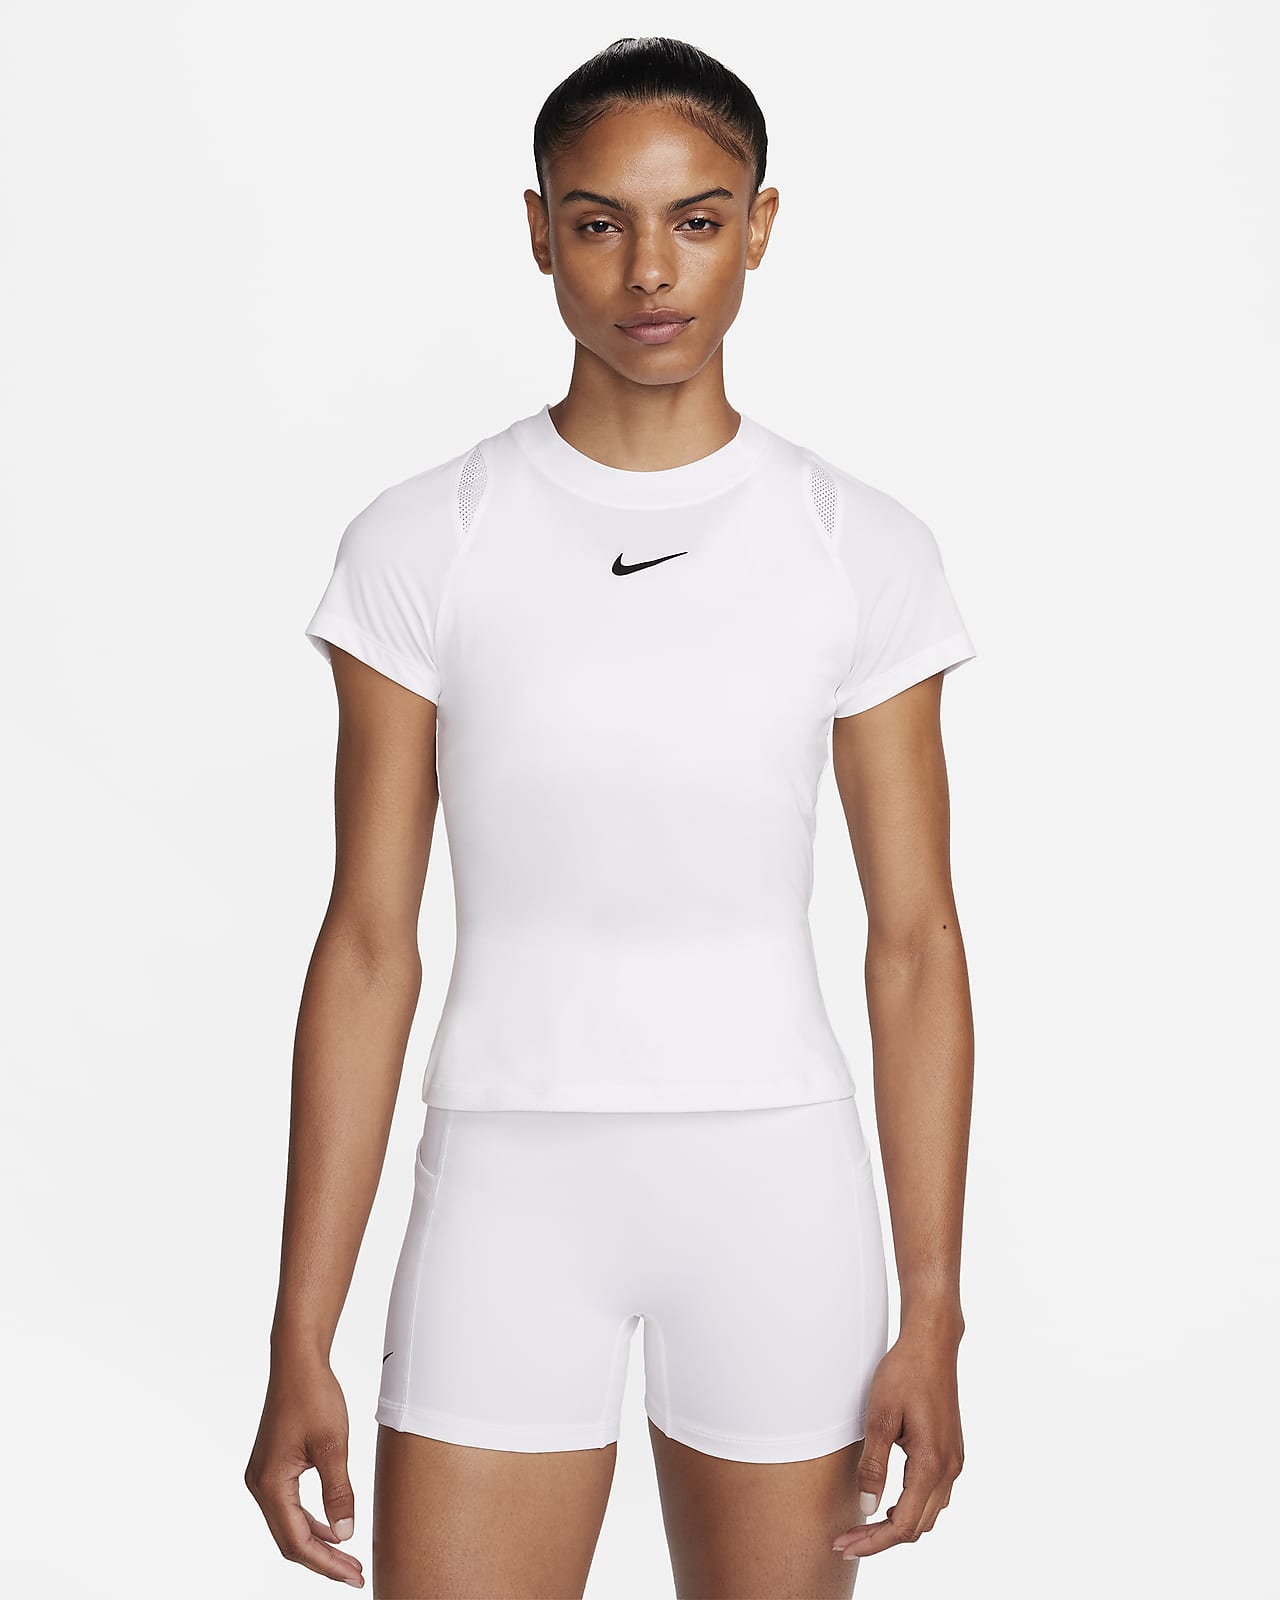 Nike Draped Reversible Women's Training Top White Medium 743170 100 :  : Clothing, Shoes & Accessories